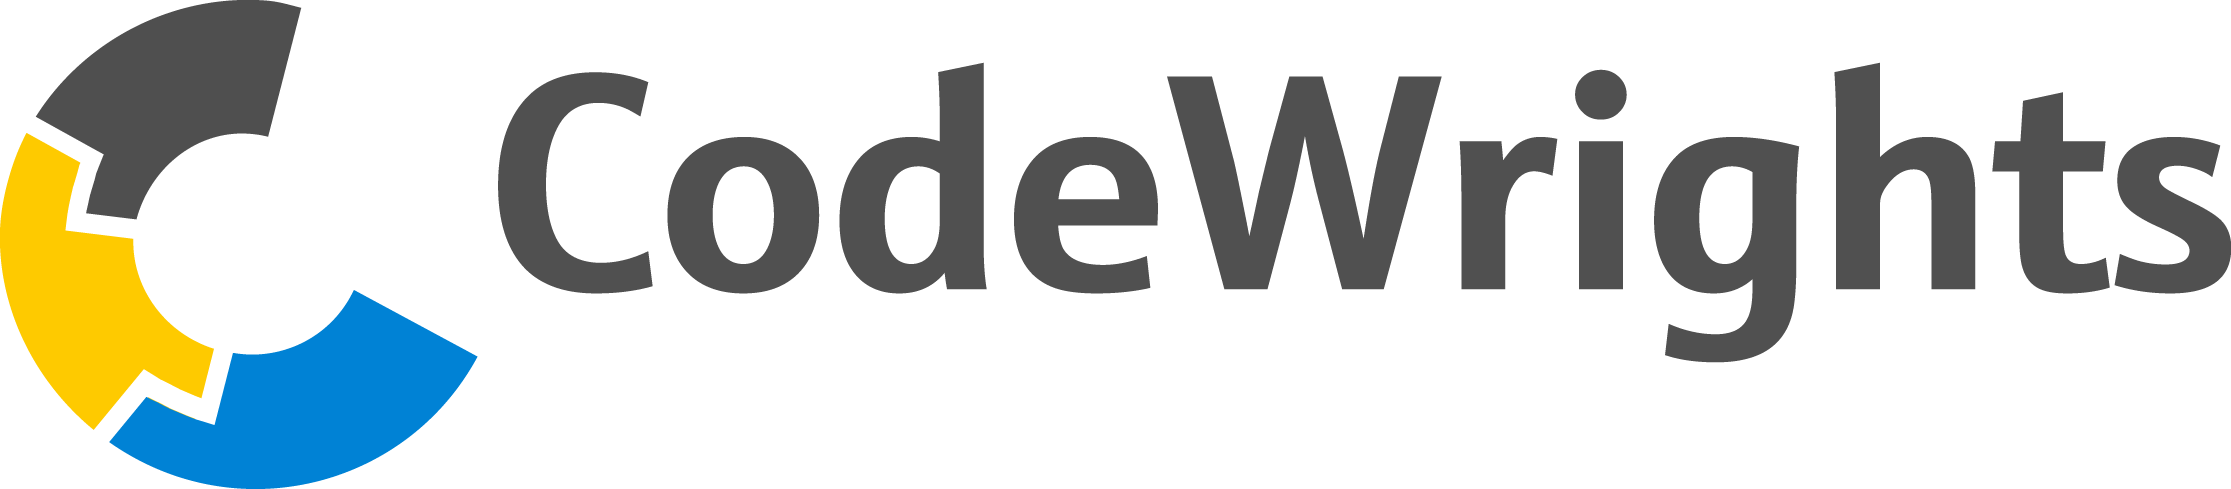 Codewrights logo ml